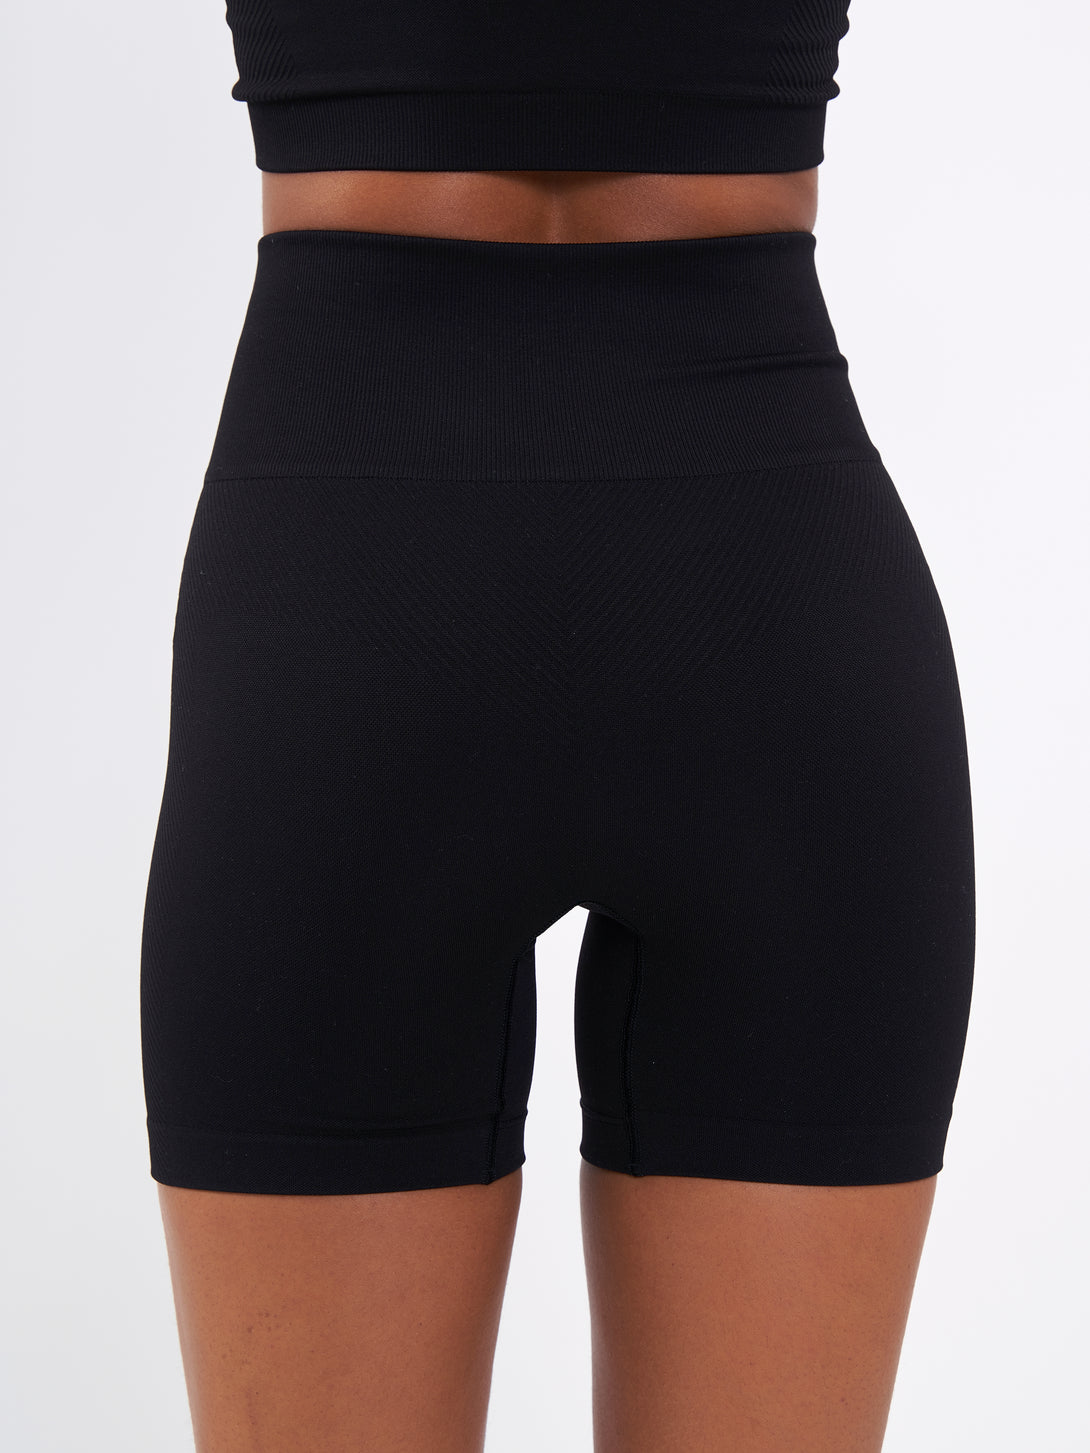 A Woman Wearing Deep Black Color Zen Perfect Seamless High-Waist Shorts. Perfect Fit